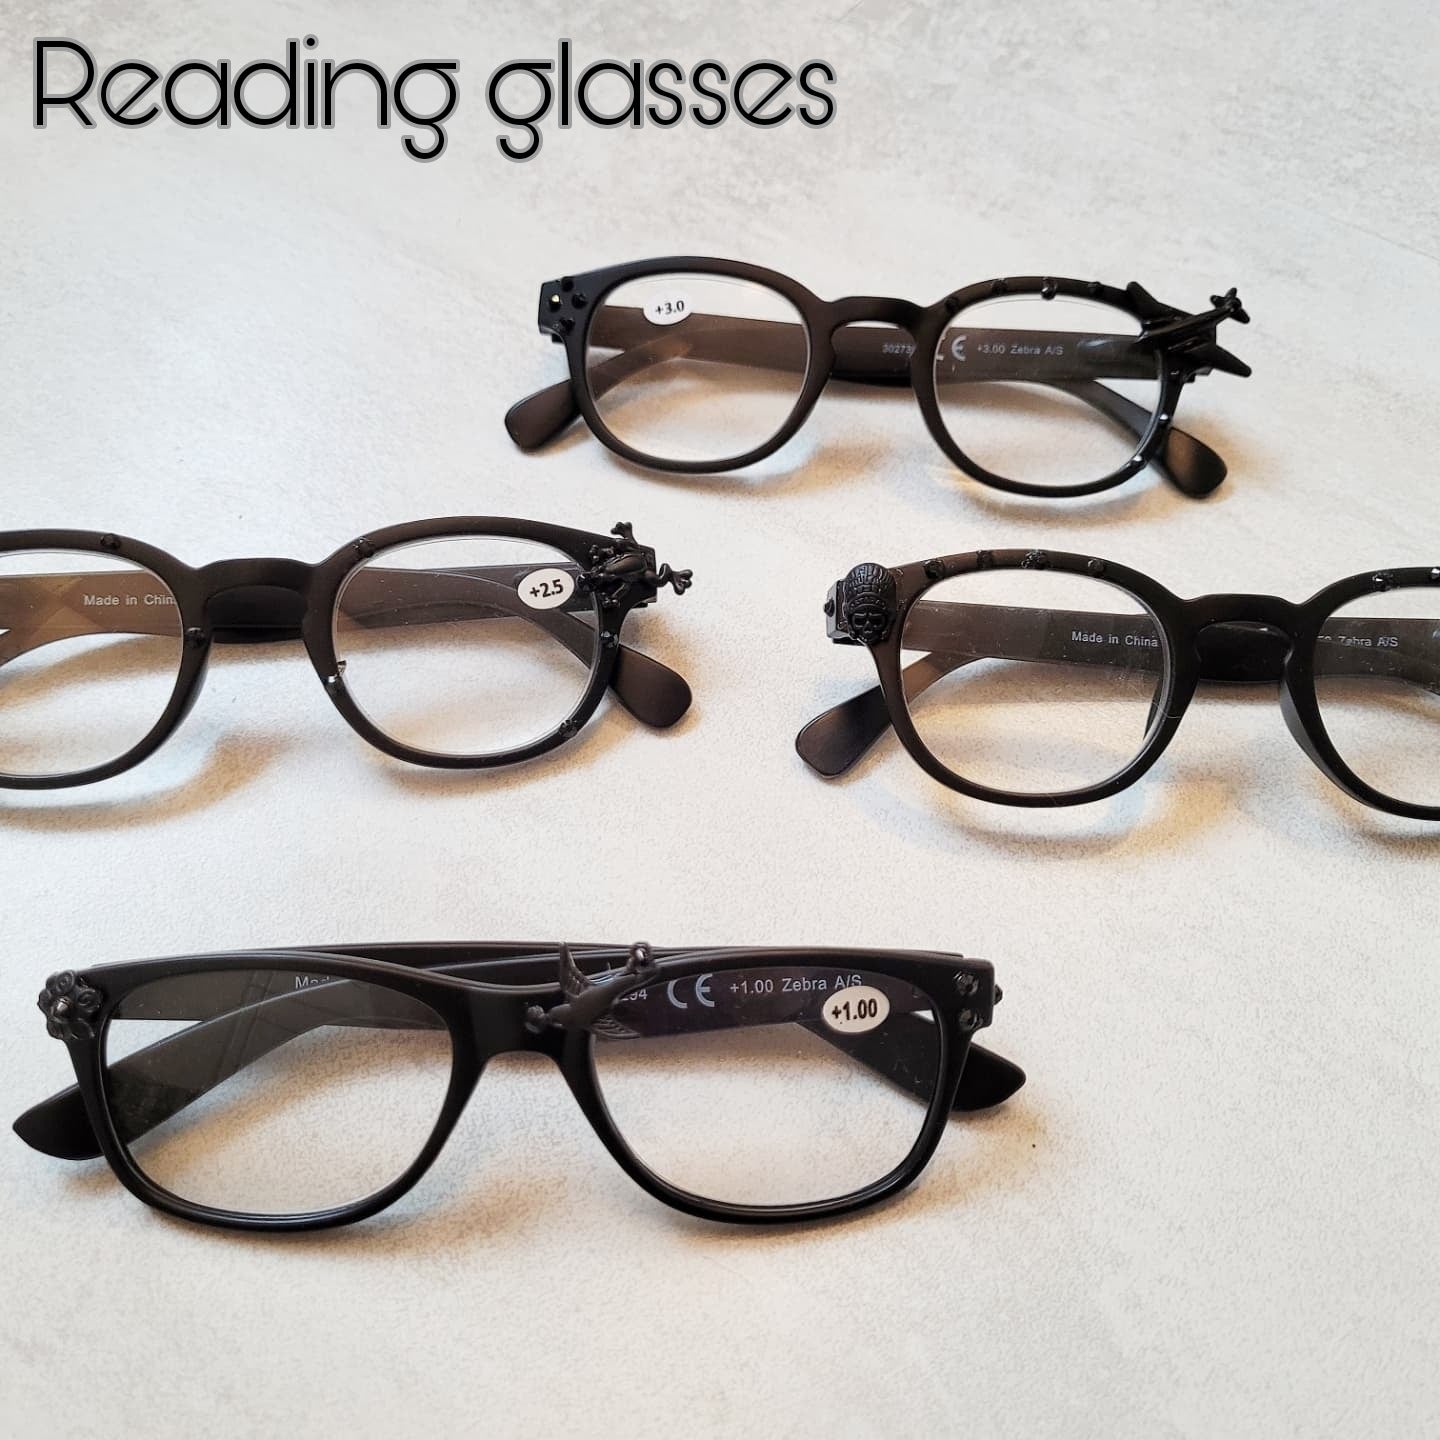 The Brainiac reading glasses, limited edition unisex model (+1,5)